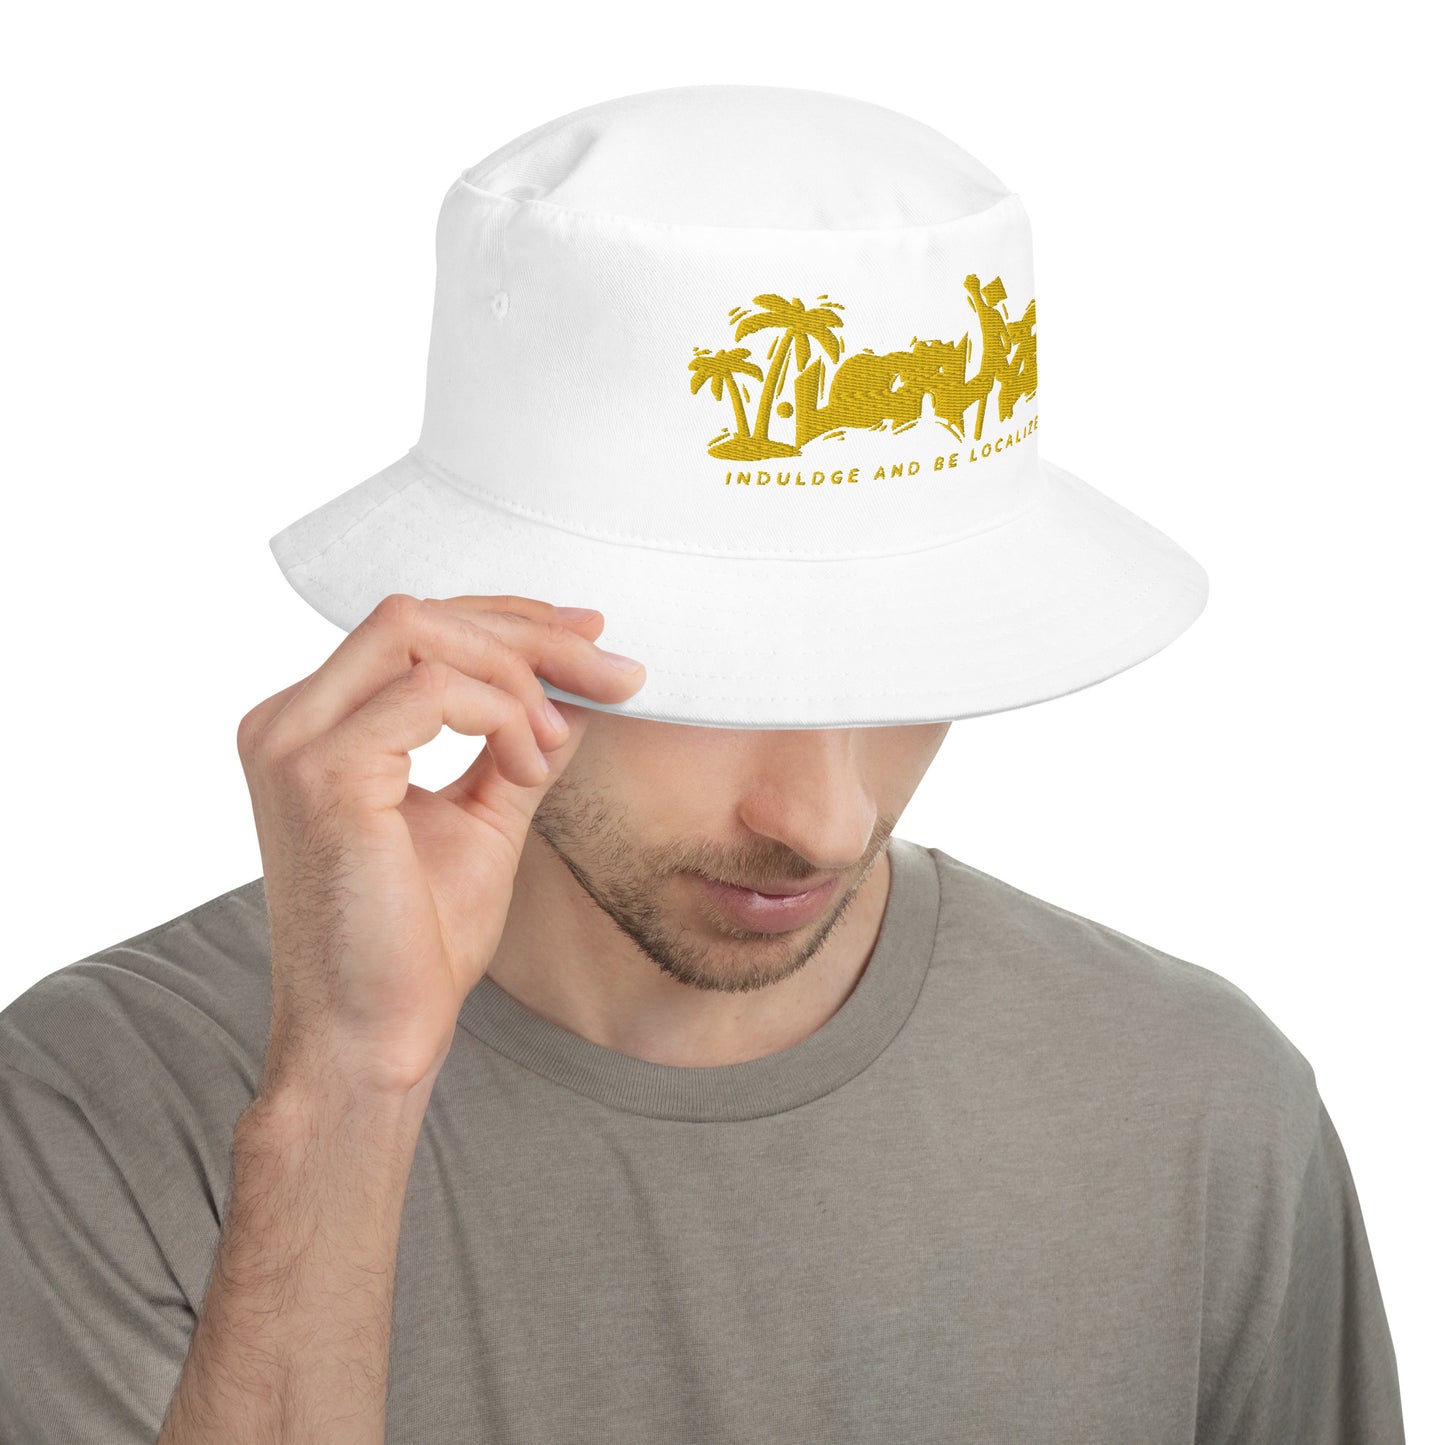 V.Localized Gold (Full Logo) Bucket Hat